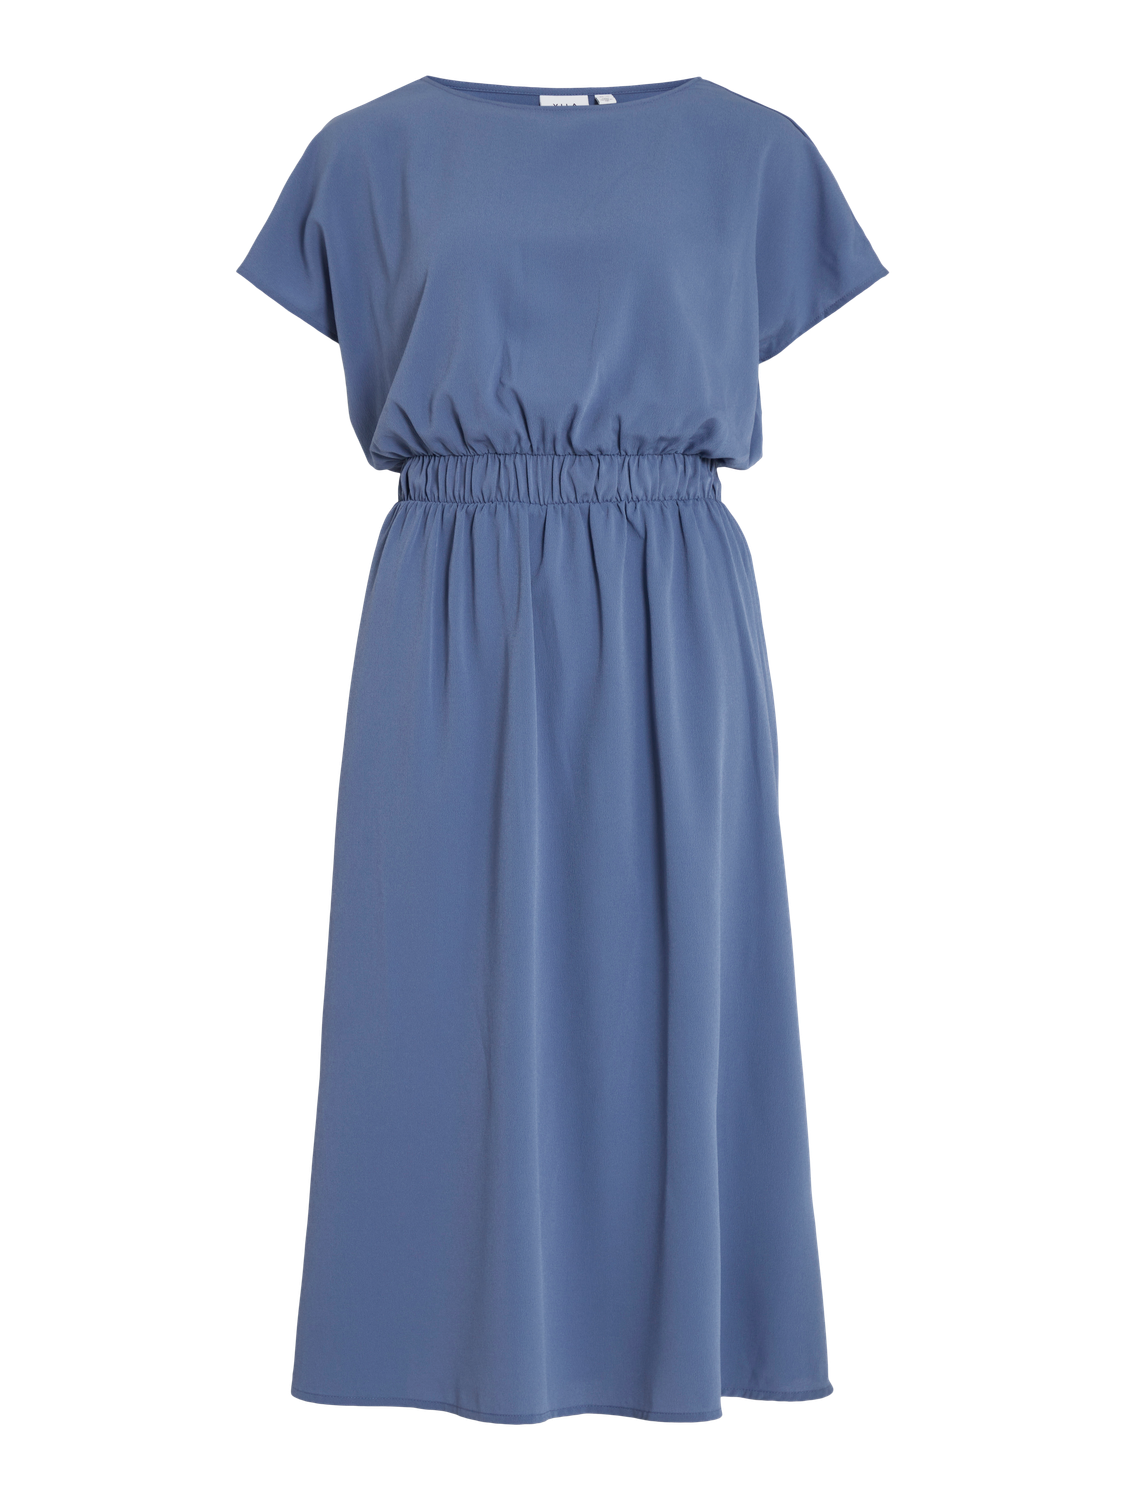 VIRIA Dress - Bijou Blue